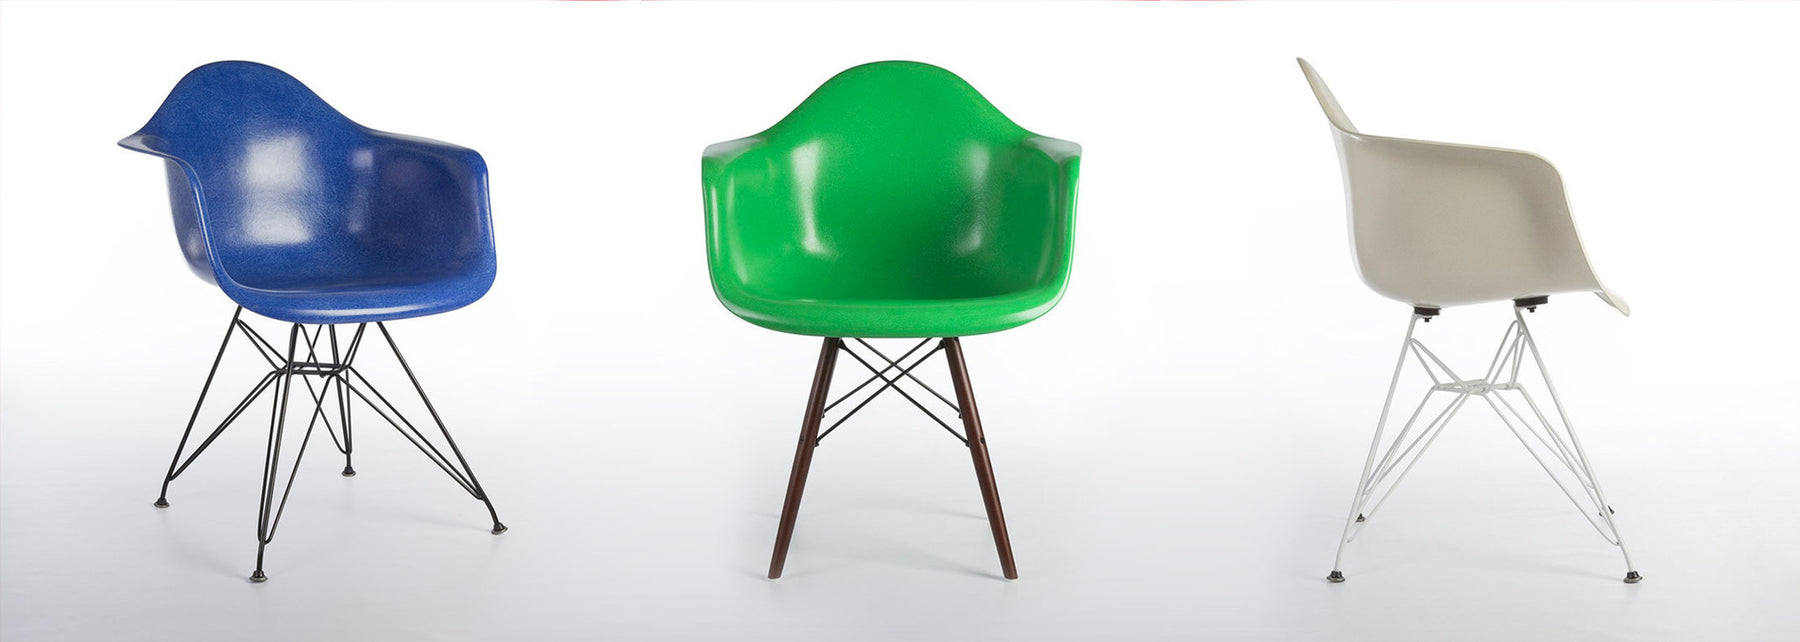 The Eames Fiberglass Armchair